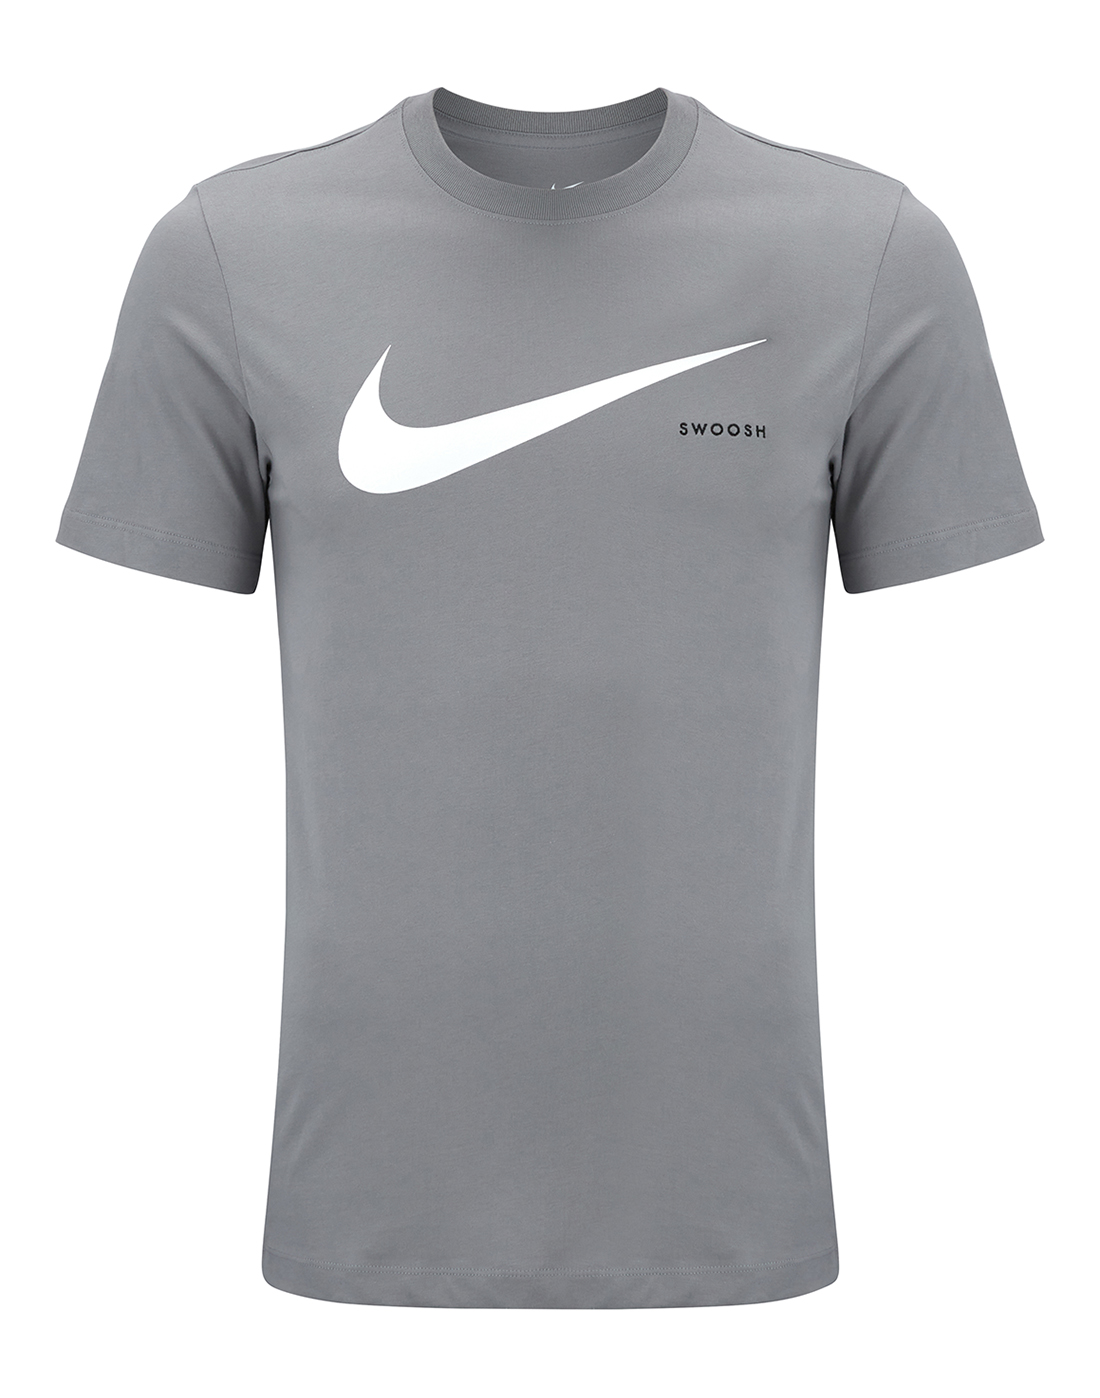 Nike Mens Swoosh T-Shirt - Grey | Life Style Sports EU